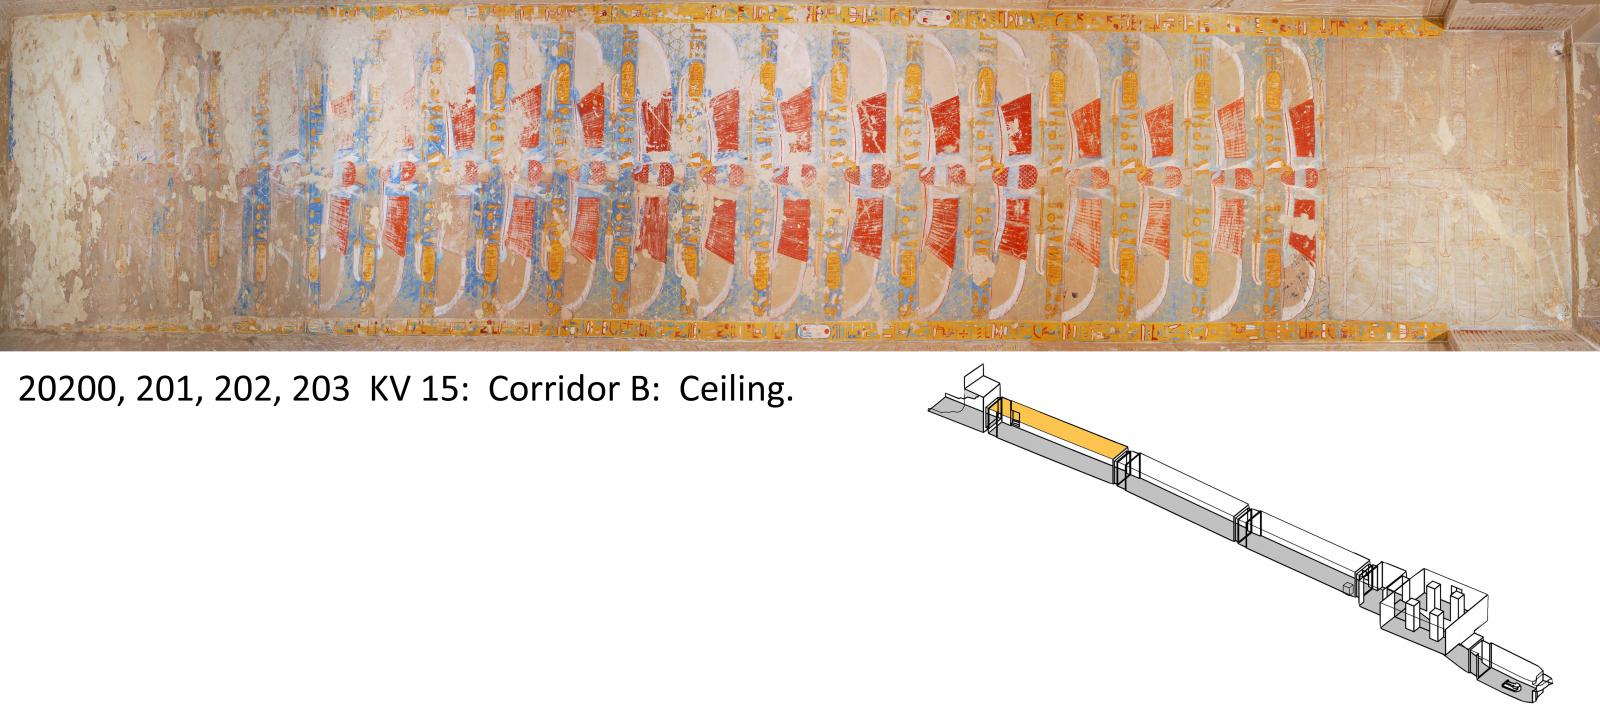 Ceiling of corridor B in KV 15. 